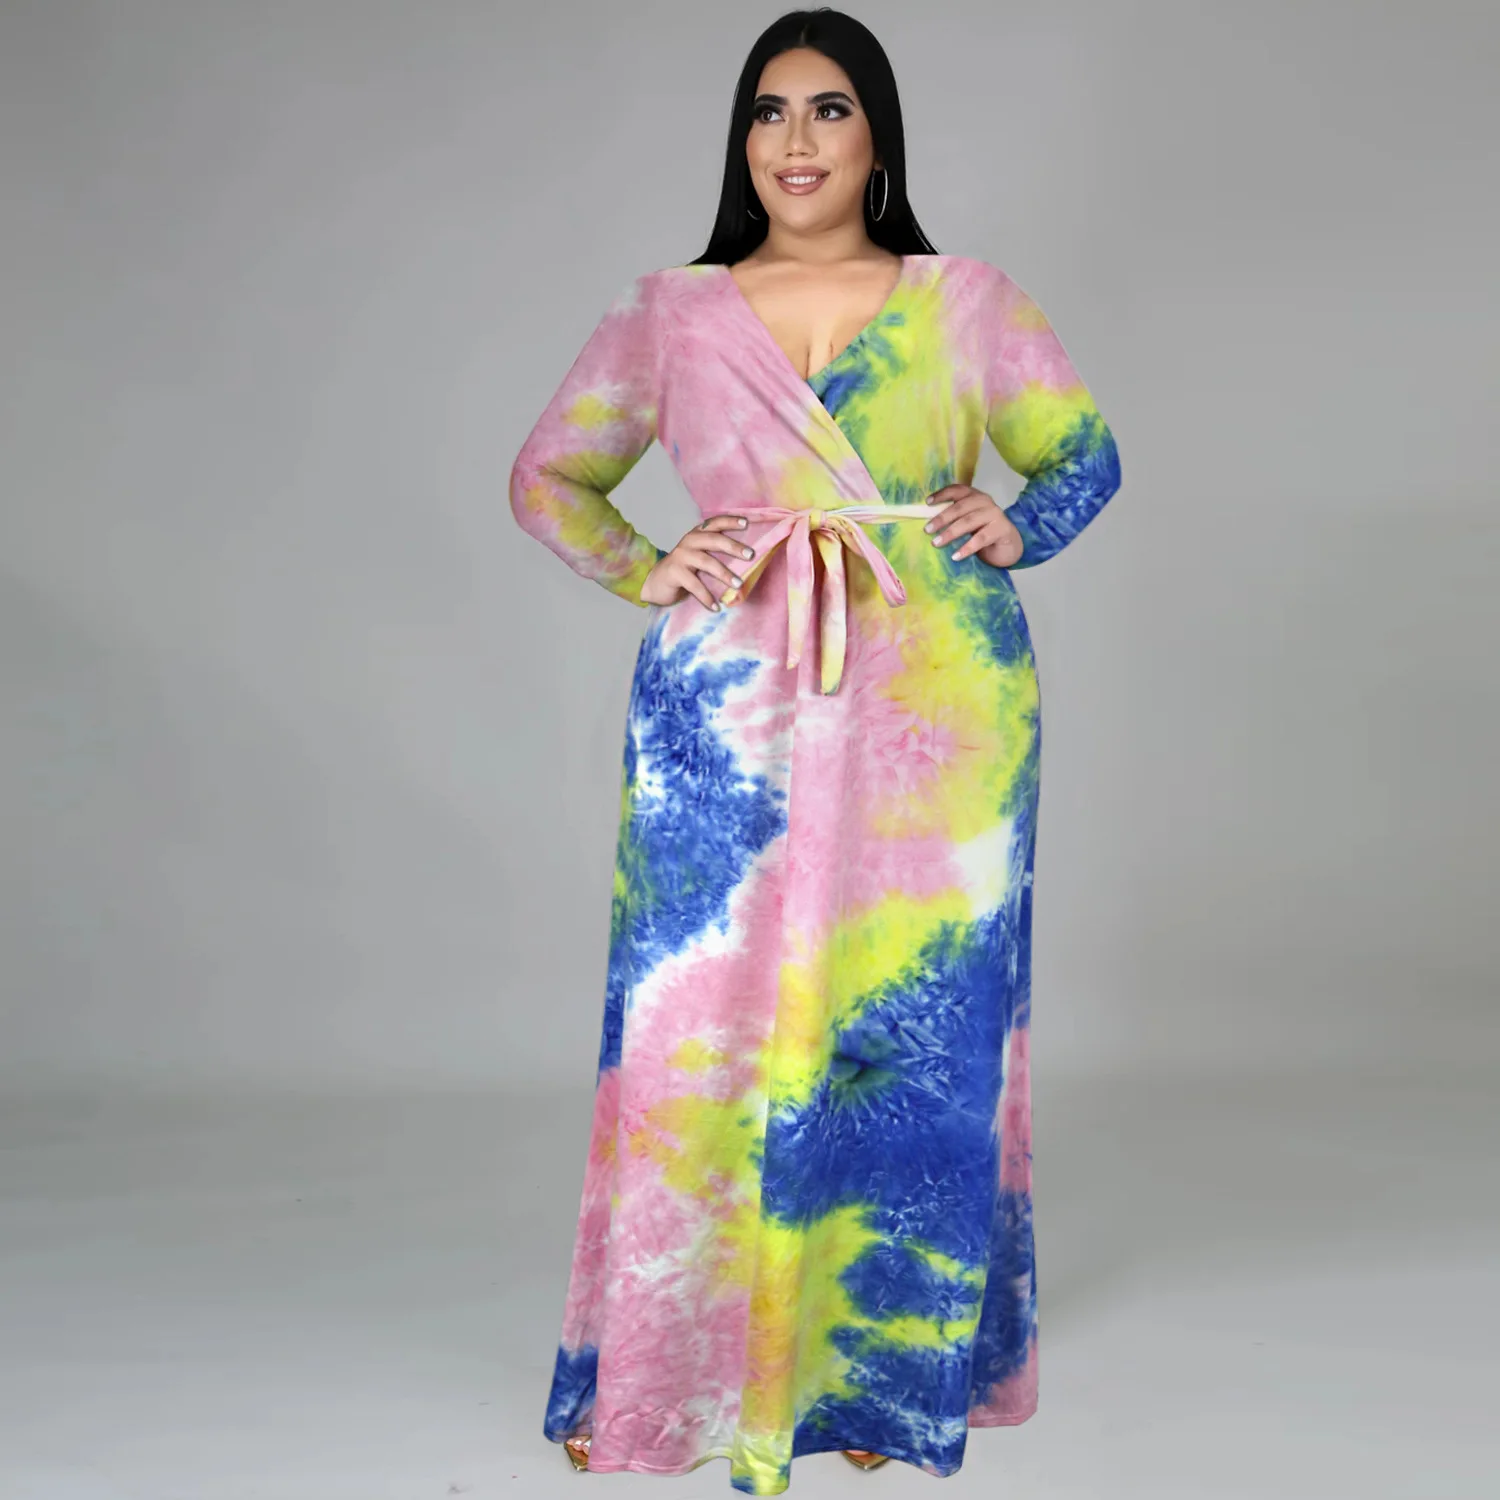 HAOOHU Women Clothing Plus Size Dresses 2021 New Autumn Large Elegant Casual Dress Tie Dye Slit Belt Long Sleeve Dress 5XL Urban